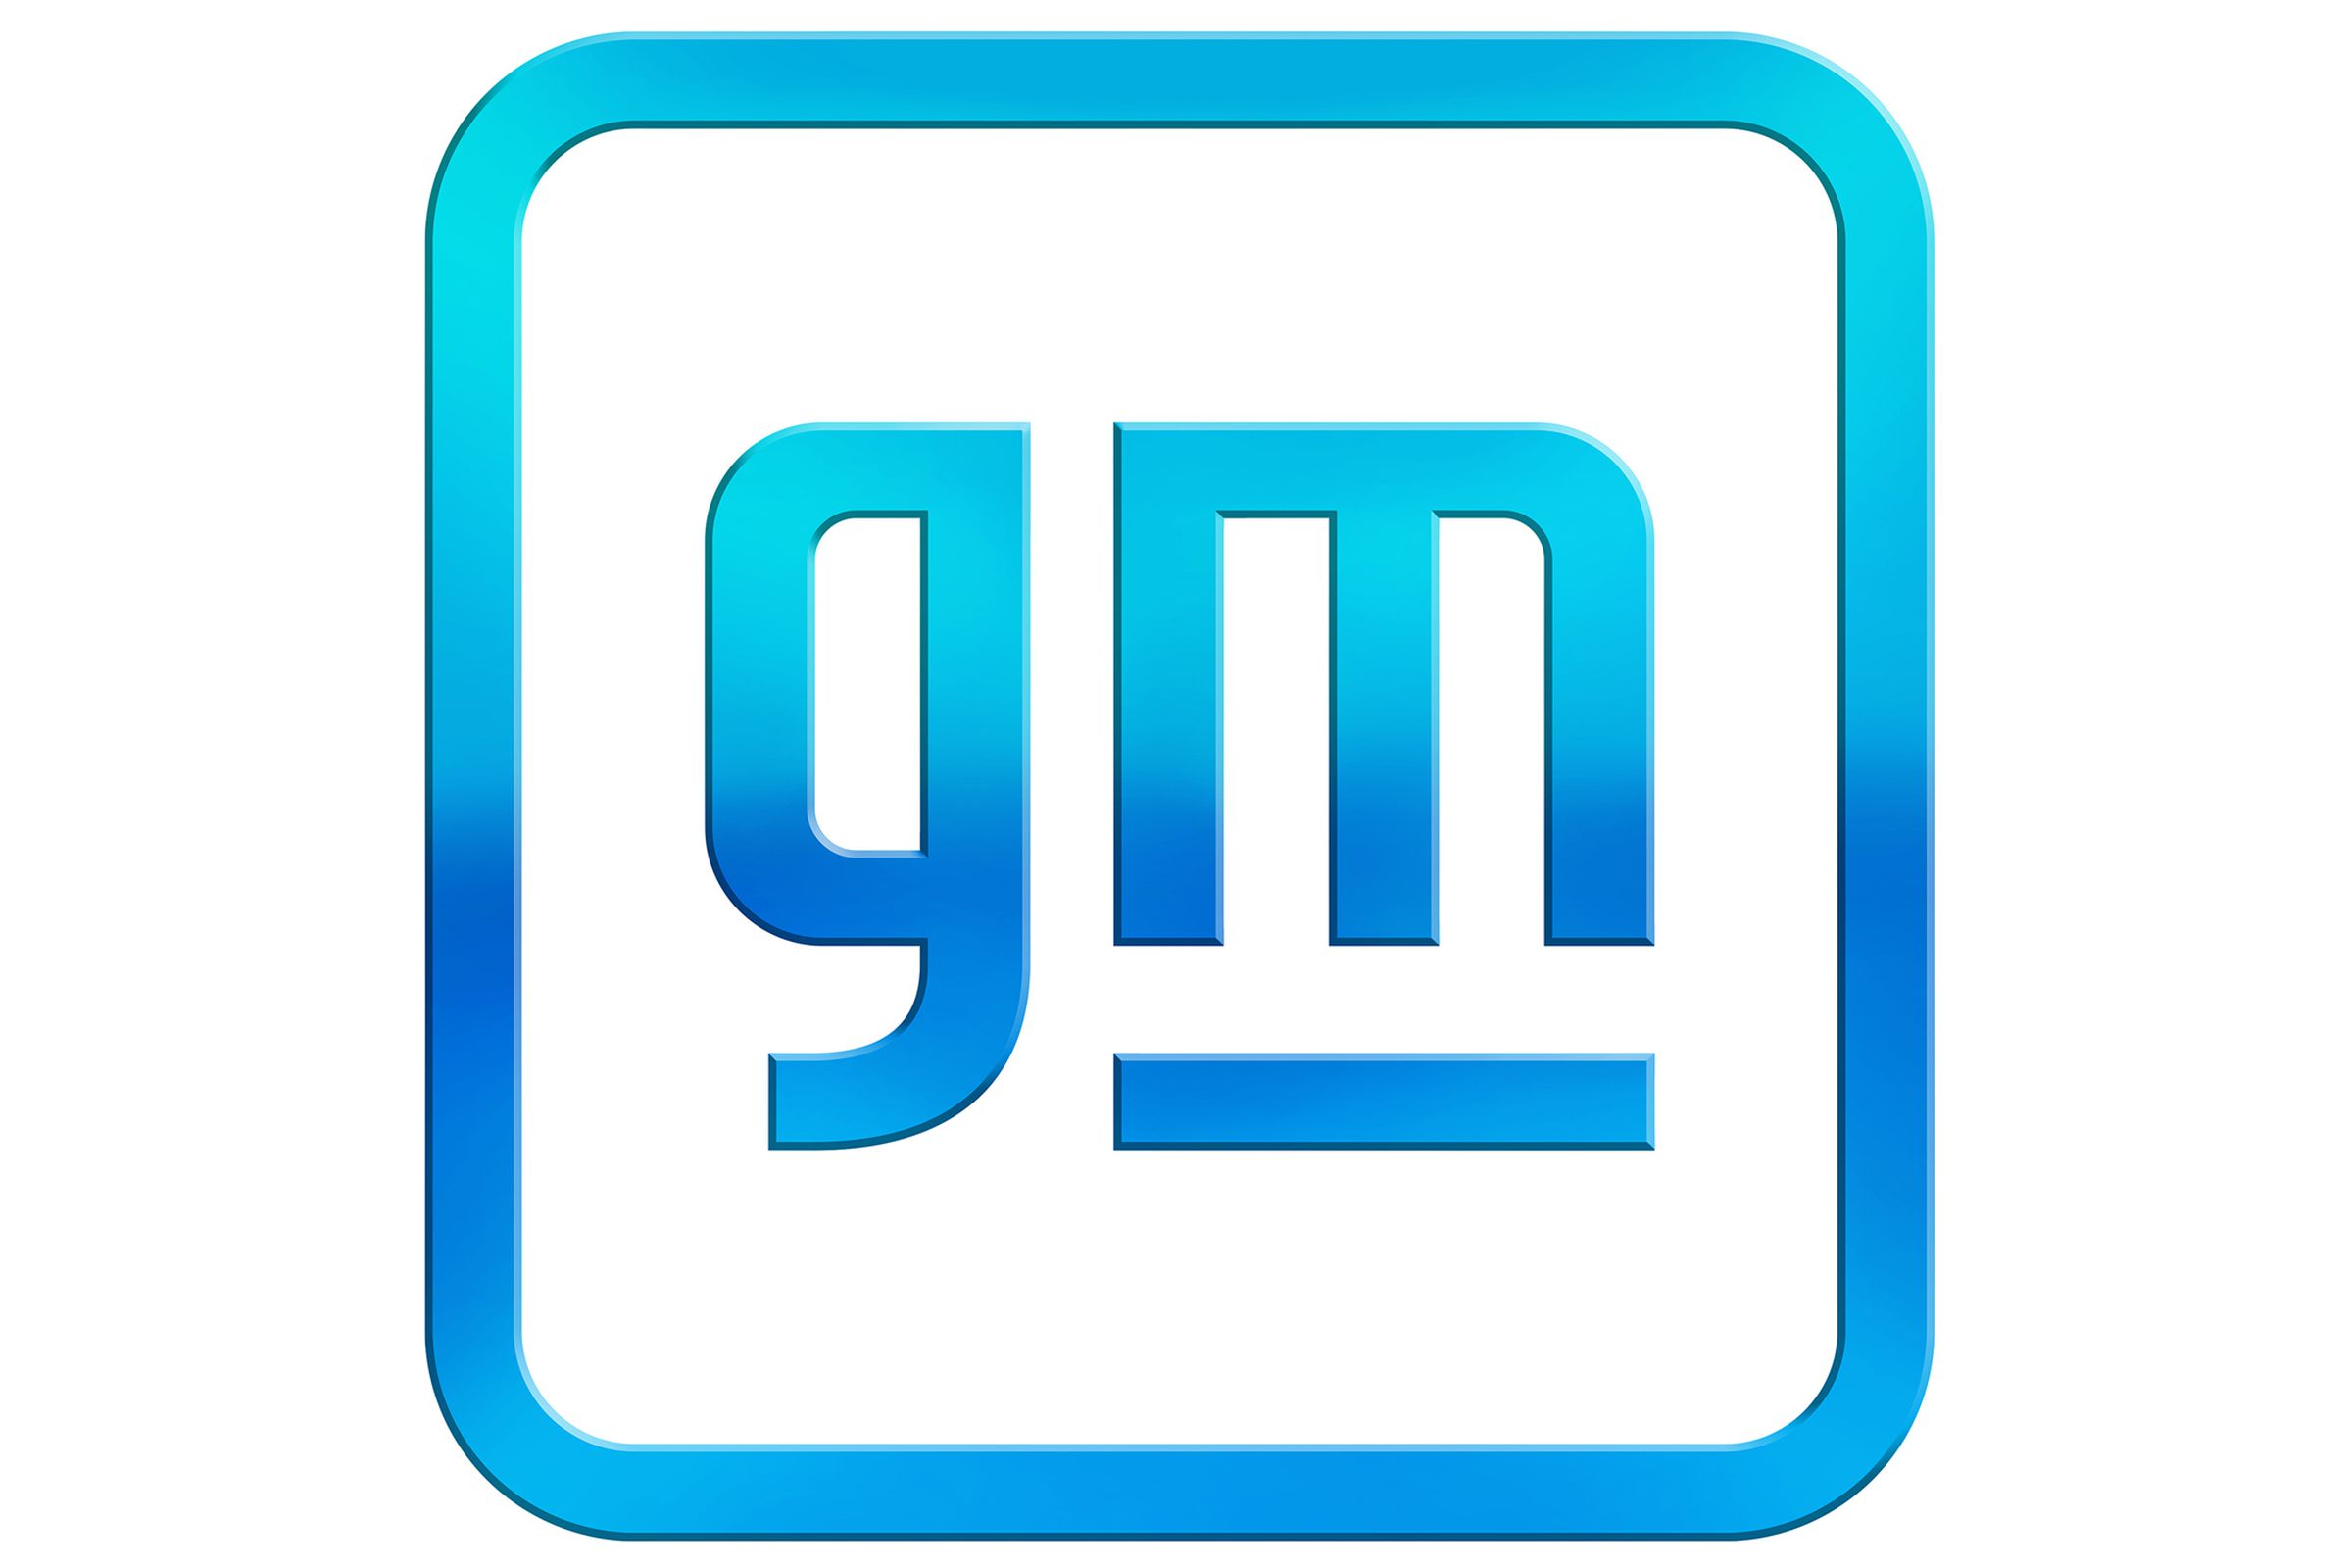 The new GM logo heralding its electric future.